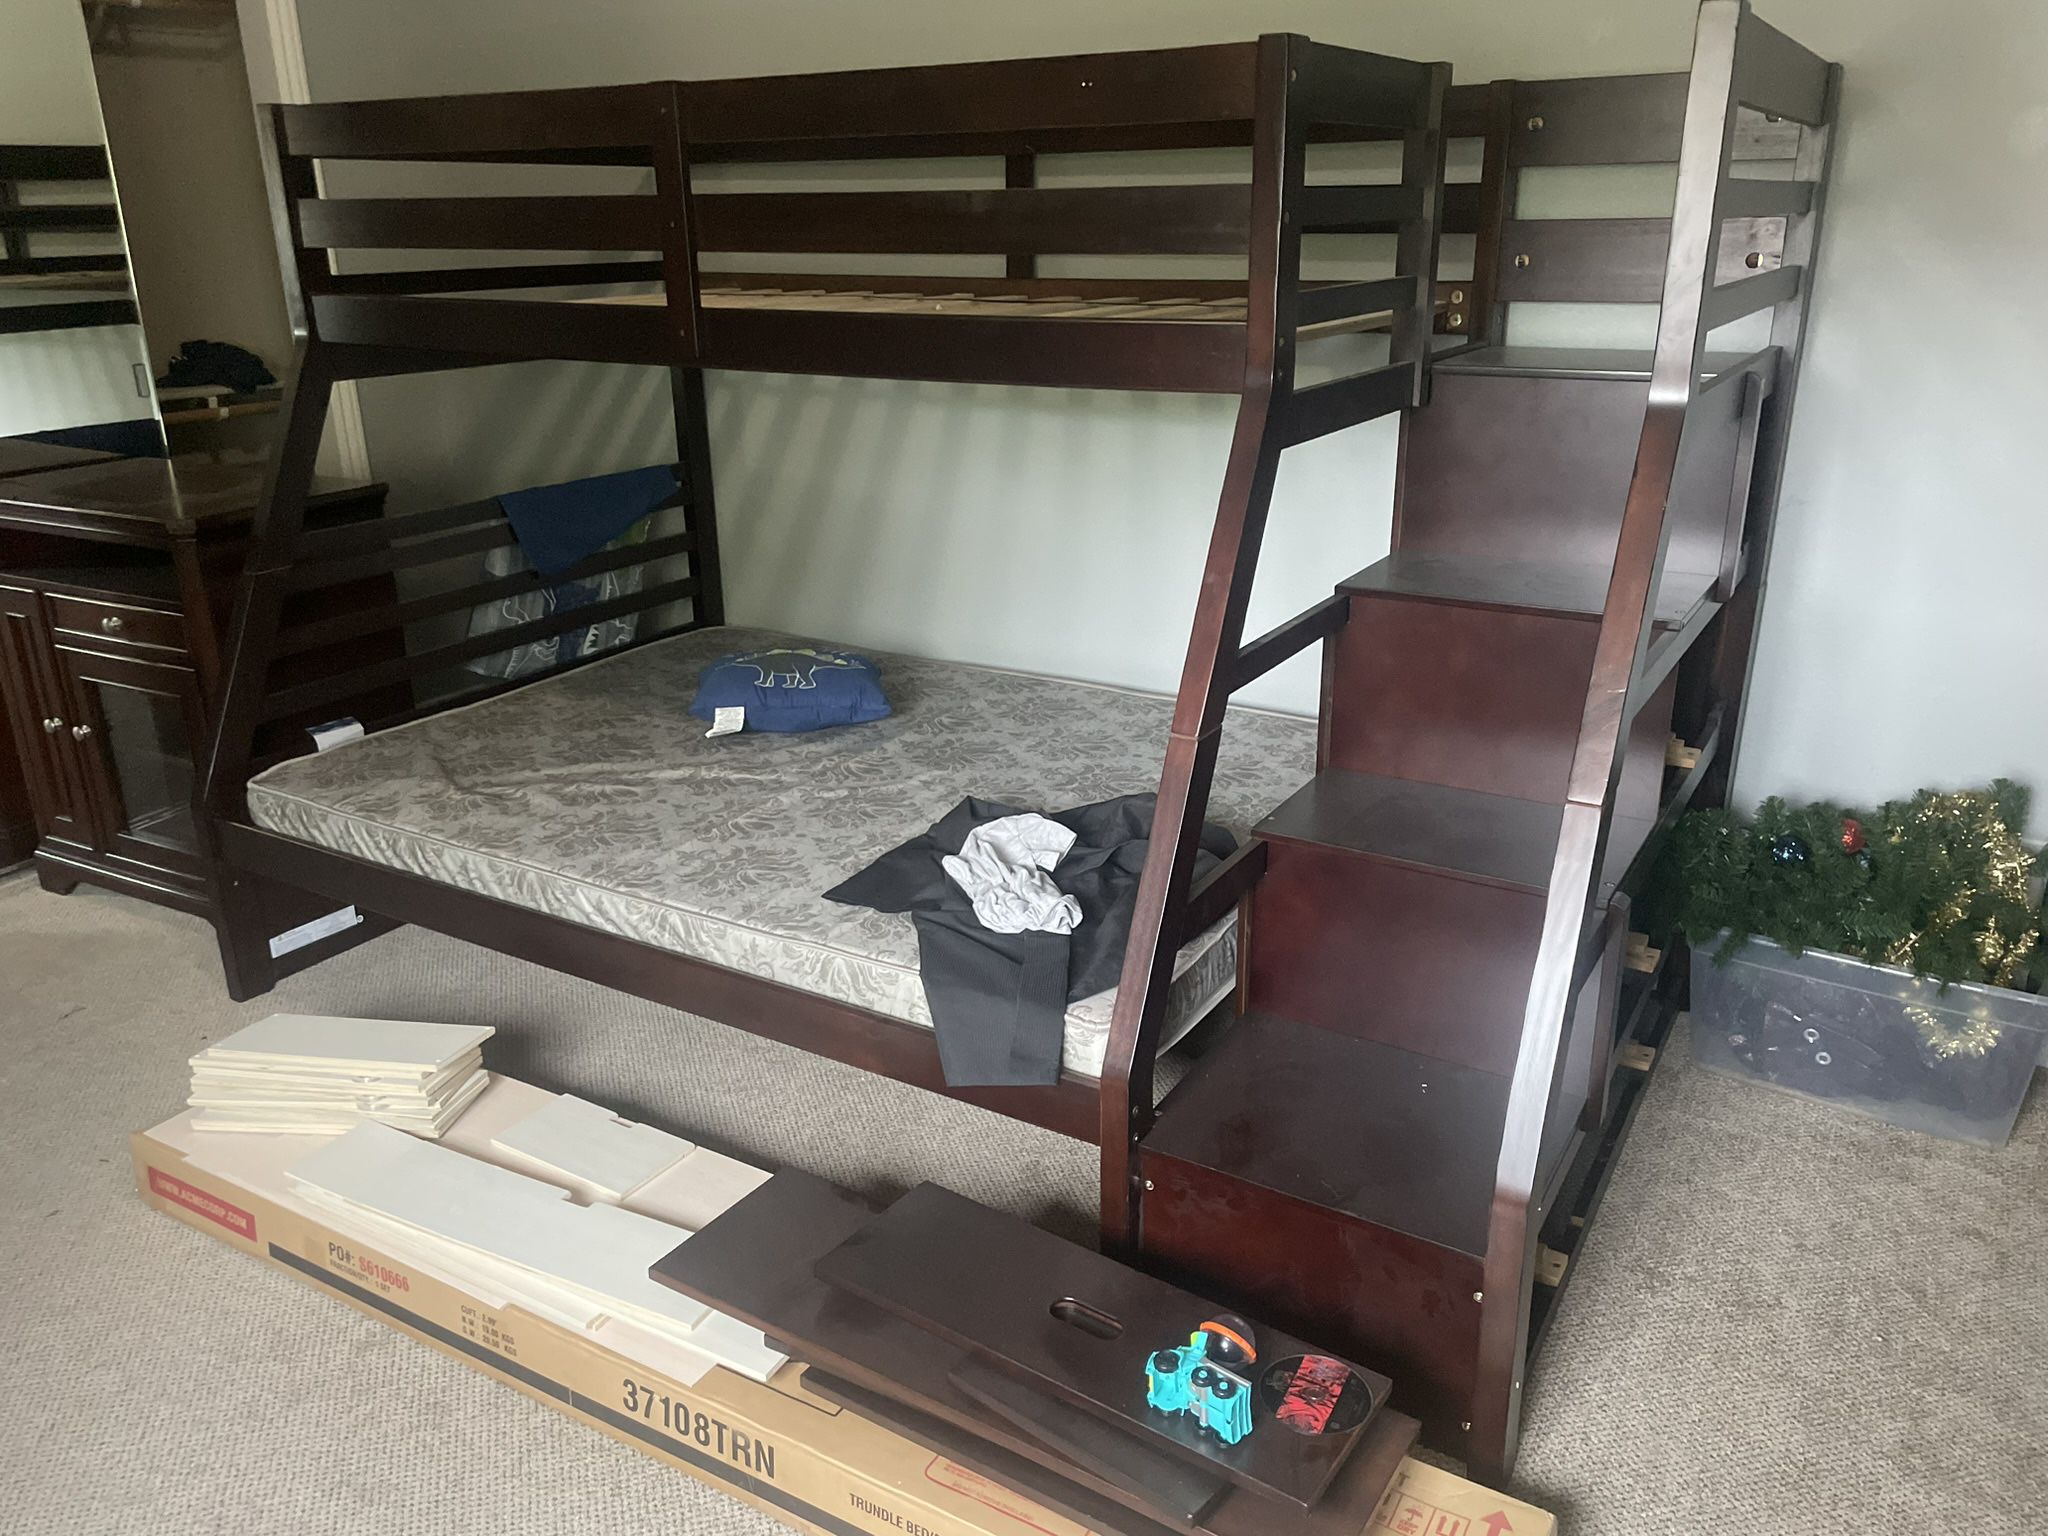 New bunkbed